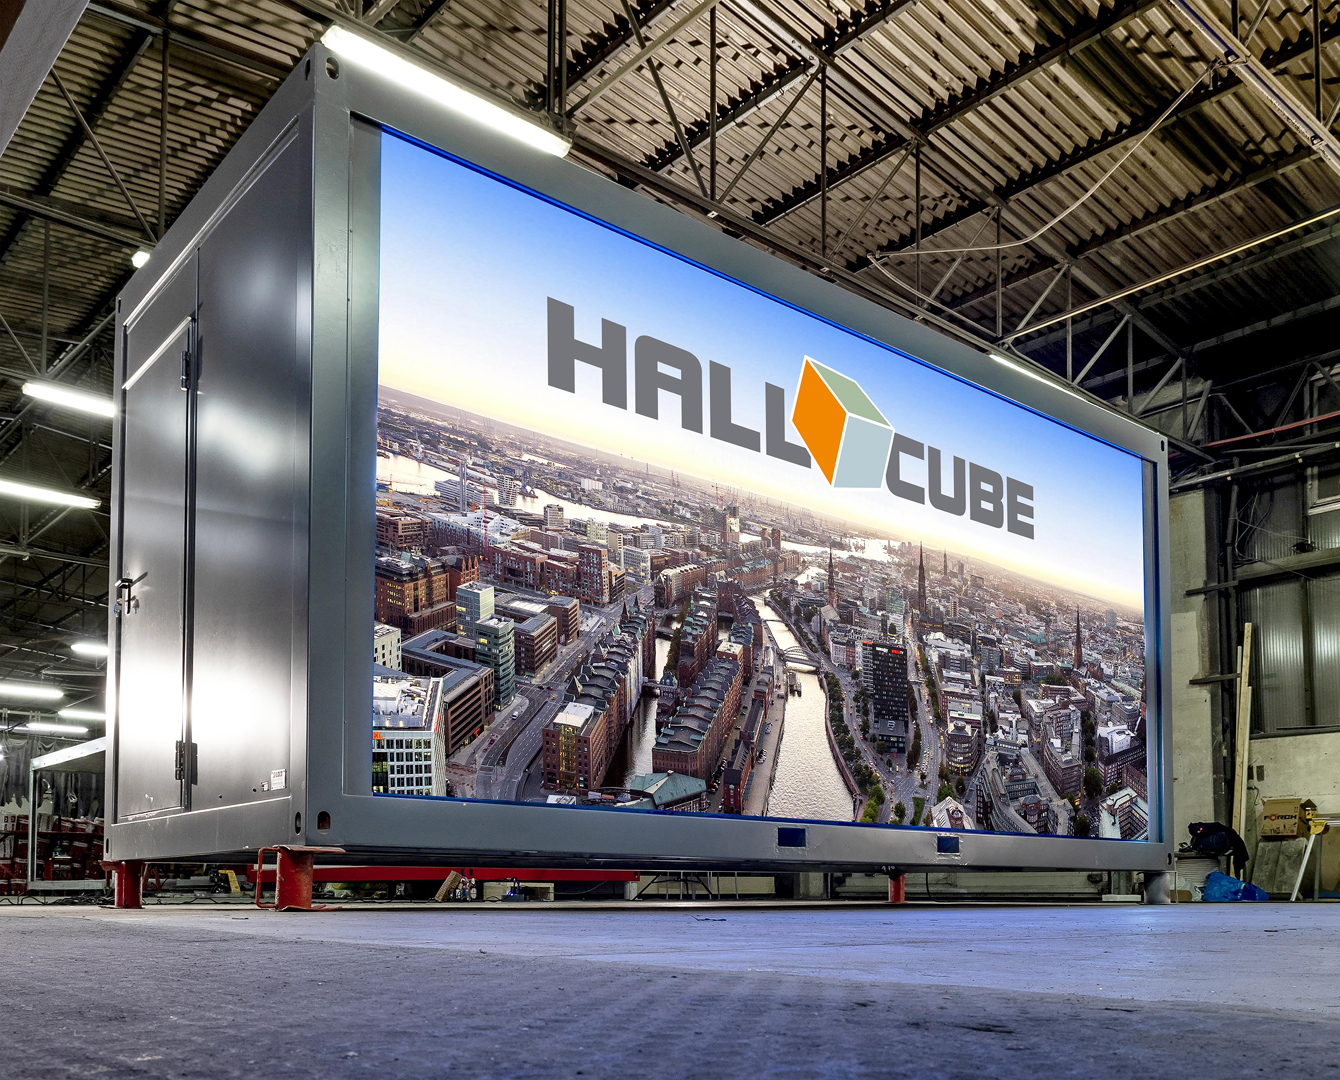 Die Hallcube GmbH